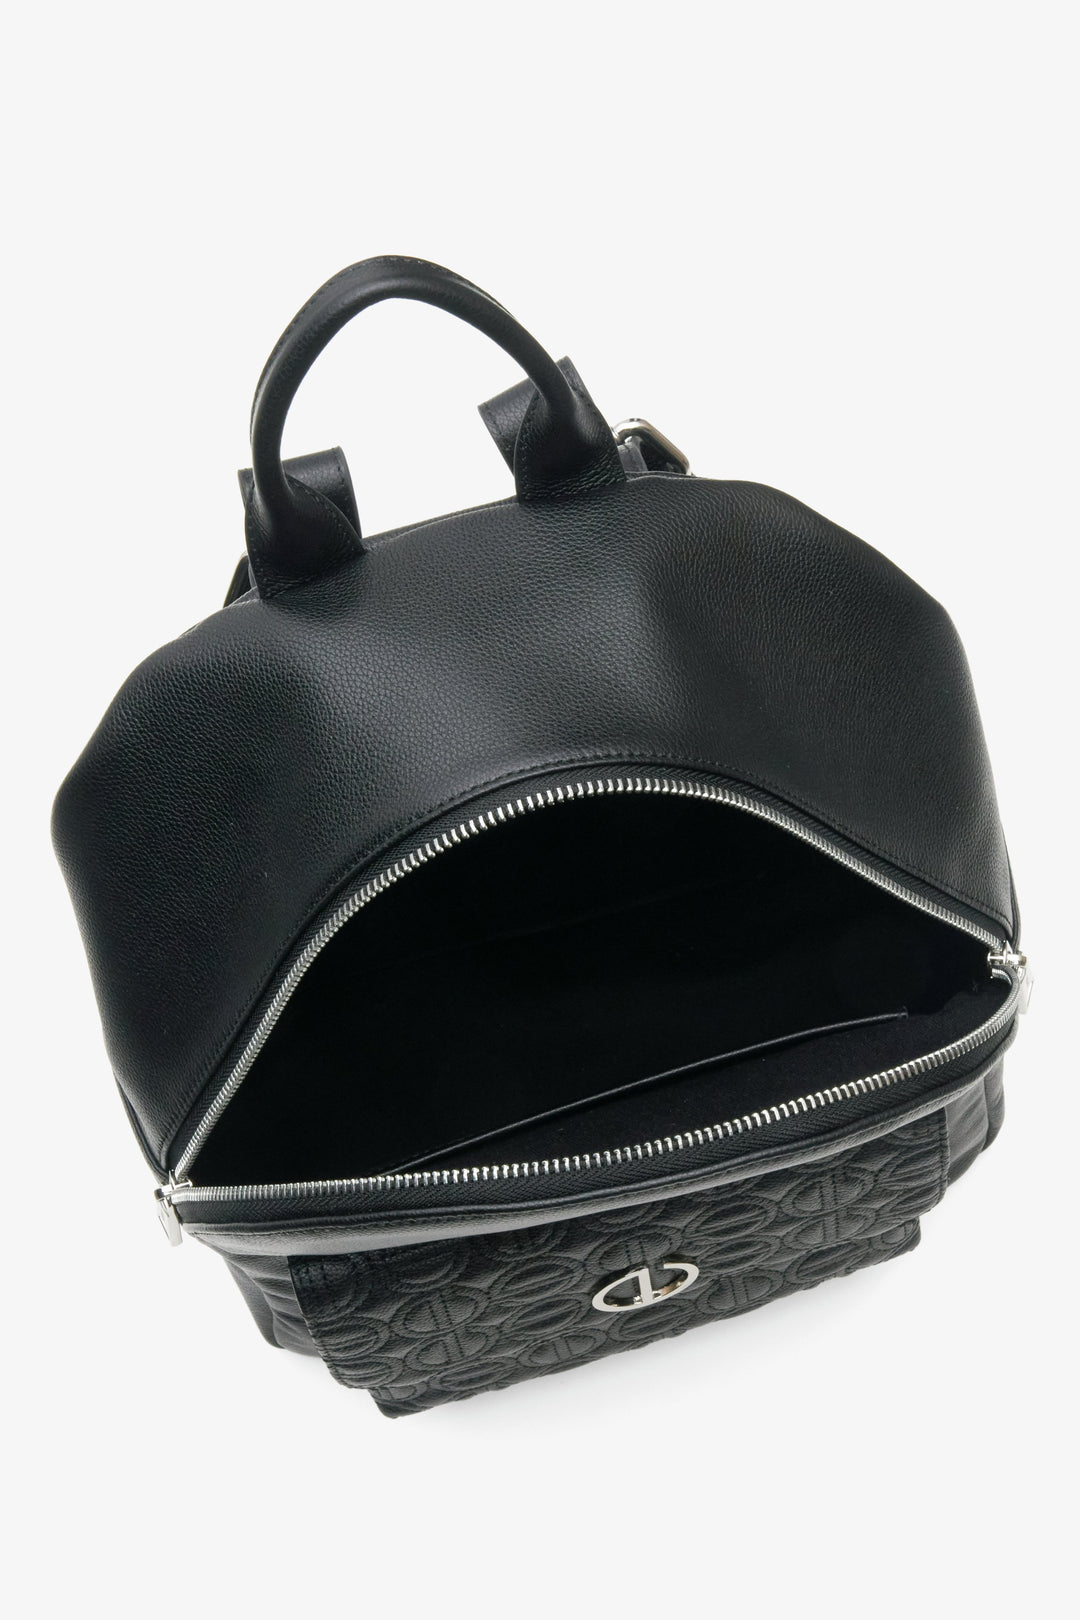 Women's black Estro backpack - close-up on interior.